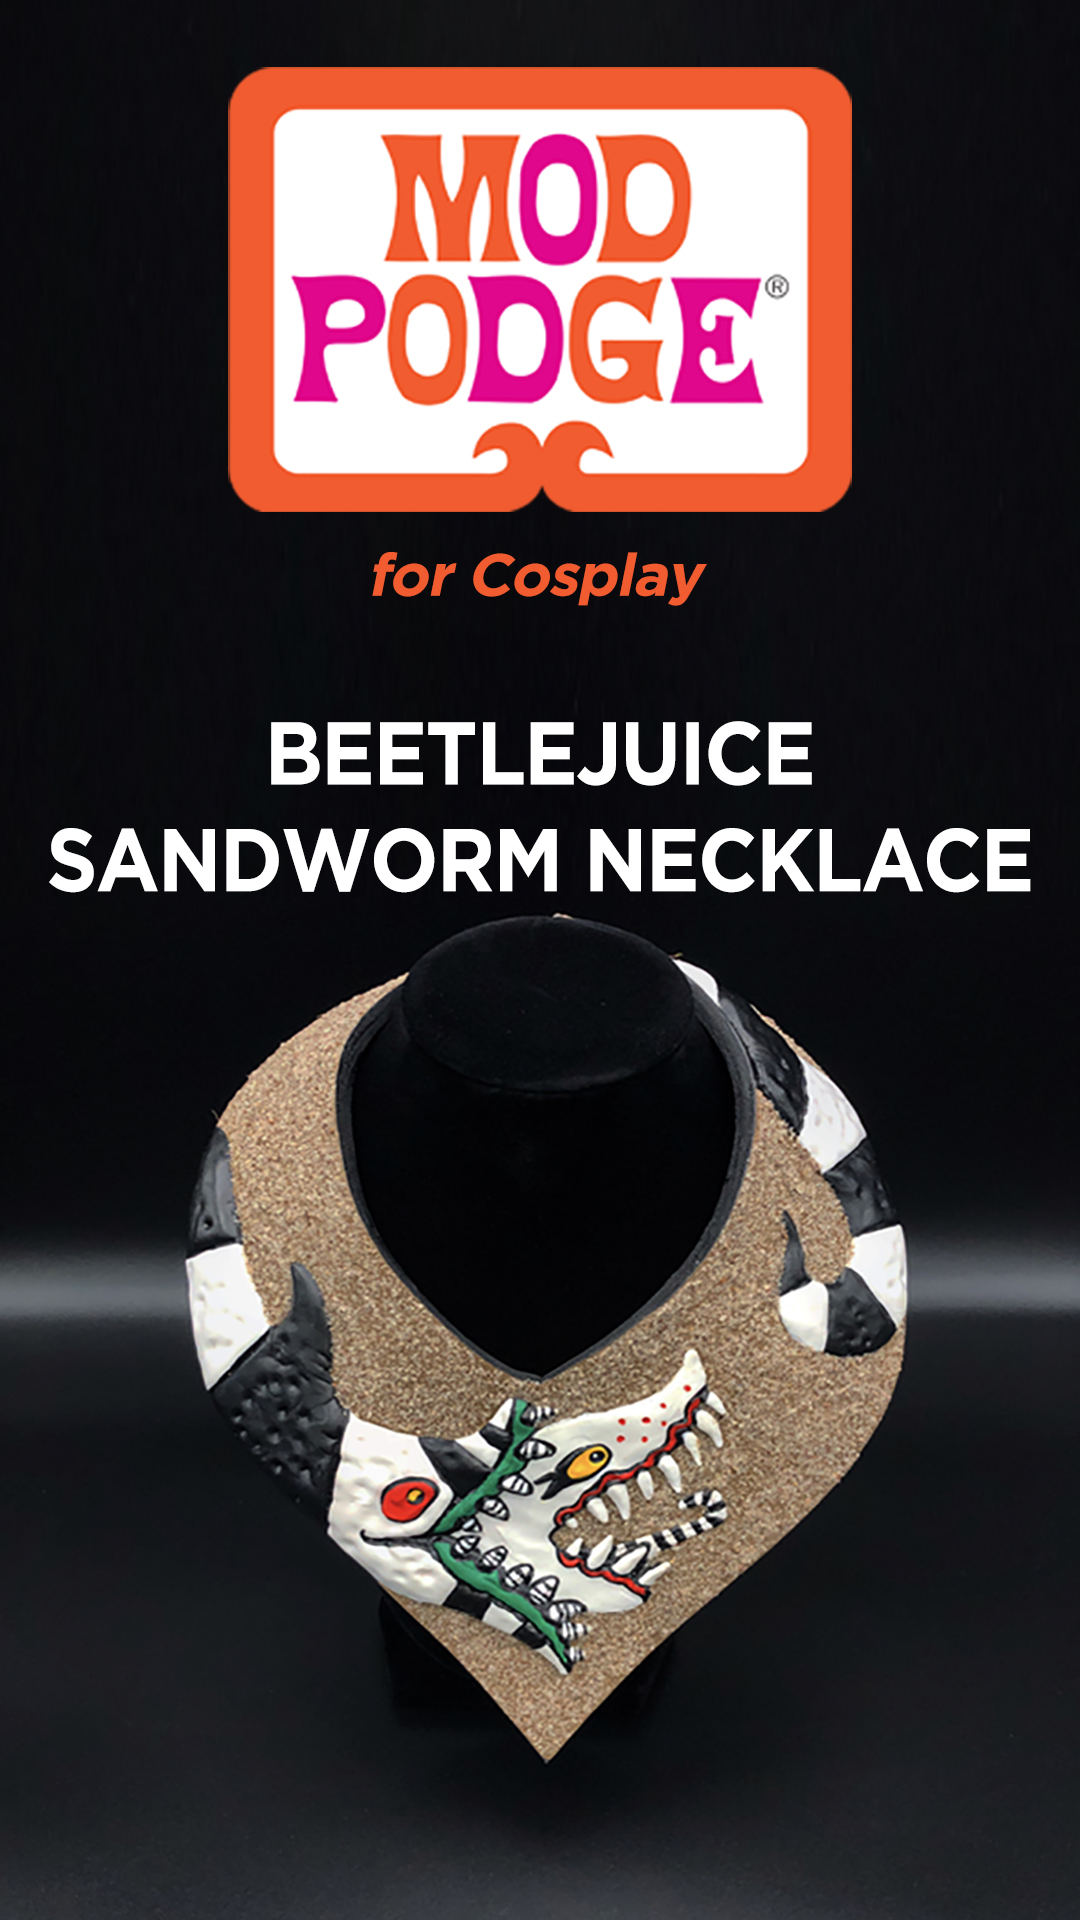 Beetlejuice Sandworm Necklace